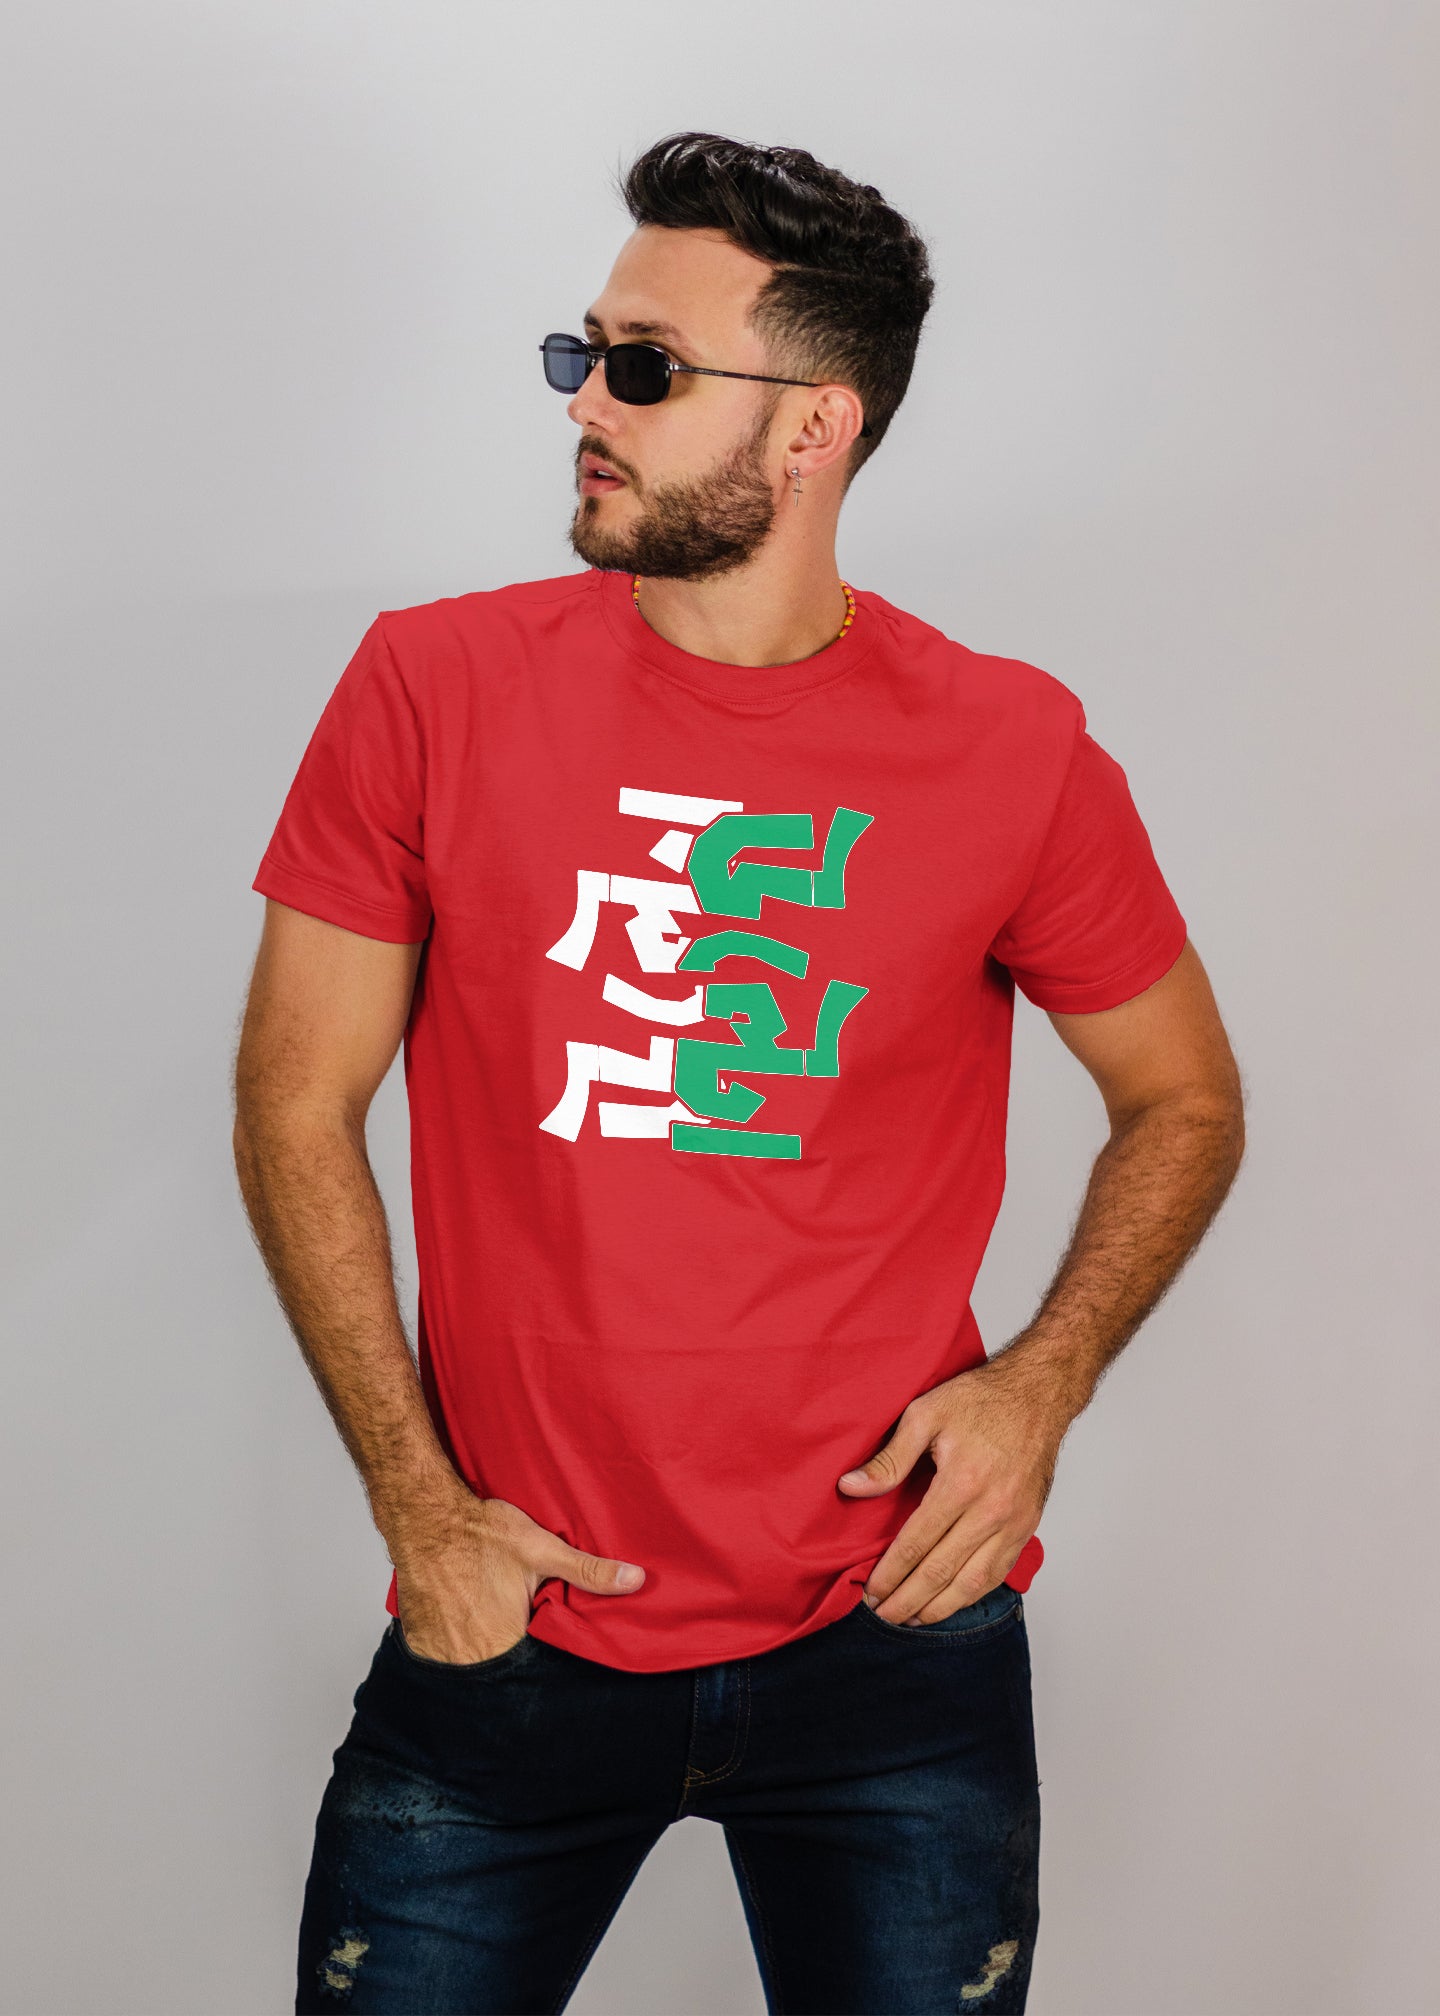 Ulto caligraphy Printed Half Sleeve Premium Cotton T-shirt For Men